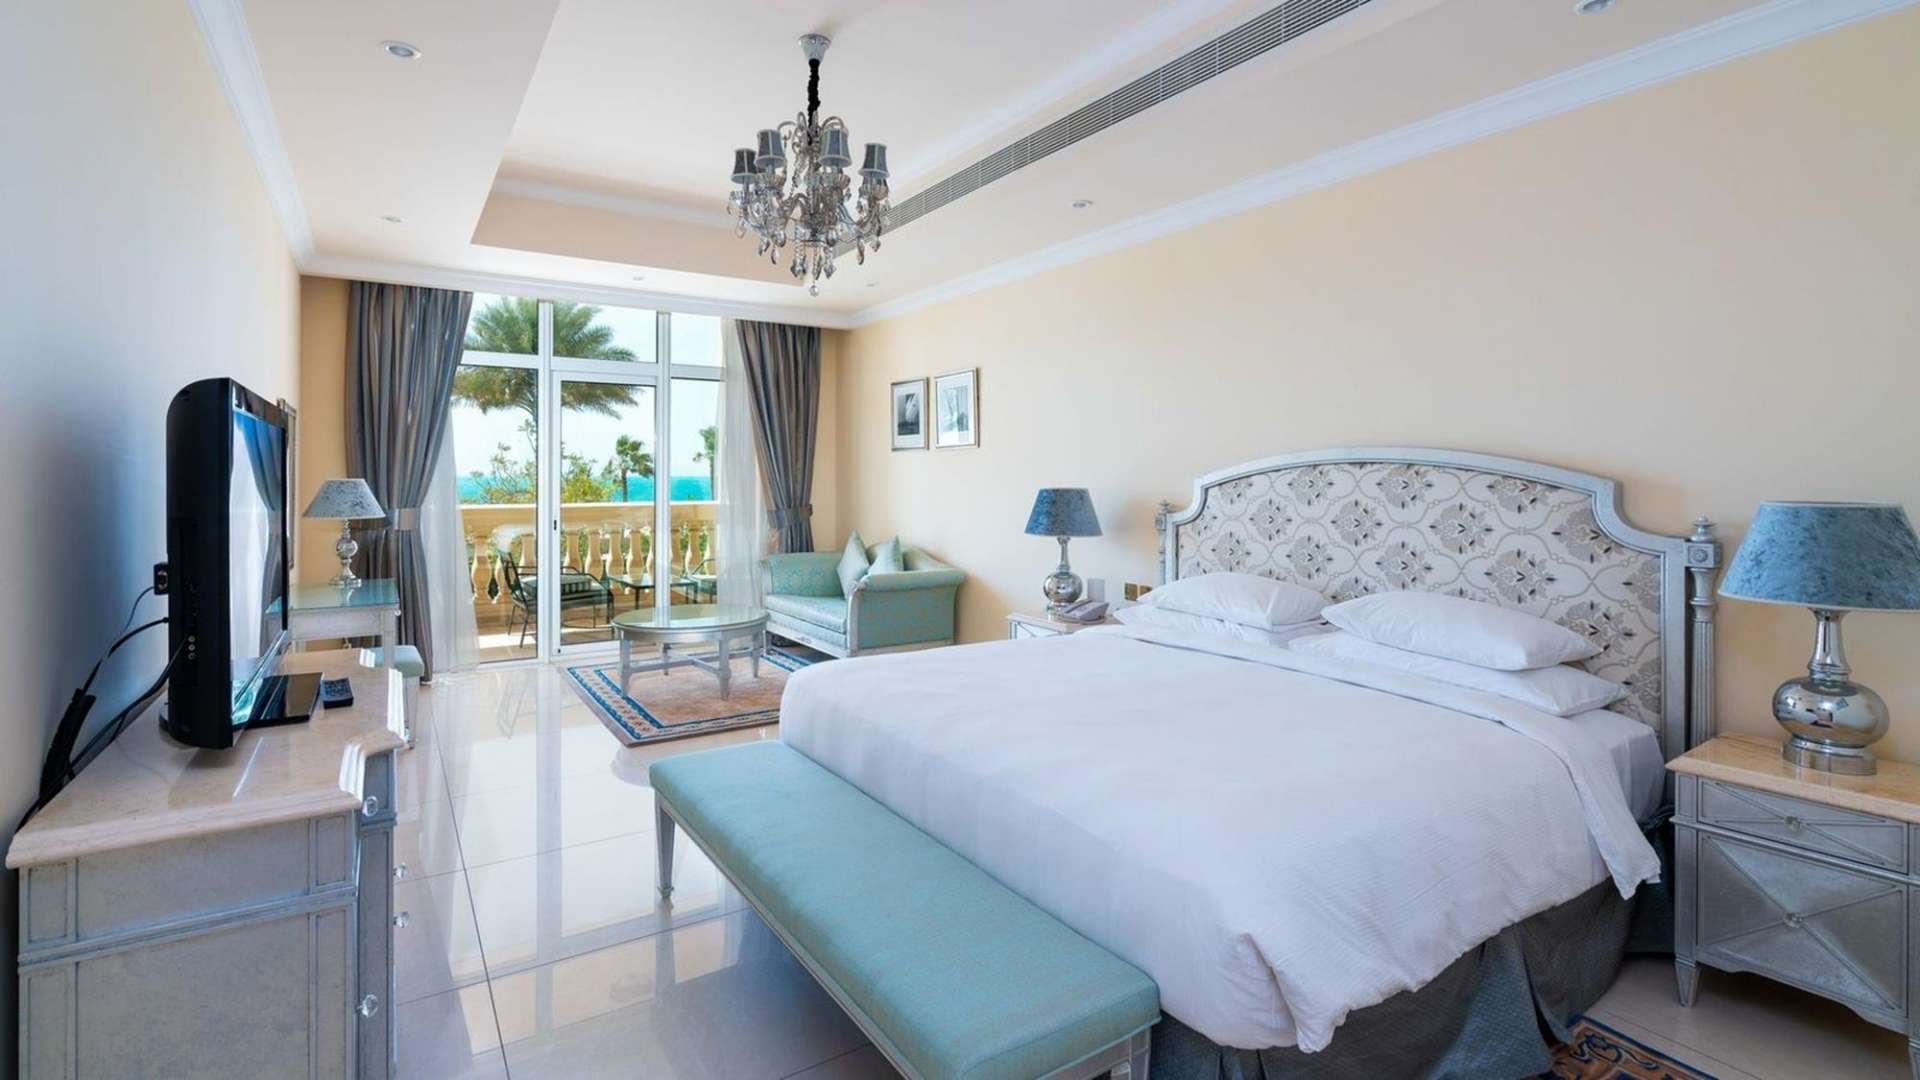 4 Bedroom Apartment For Sale Kempinski Palm Residence Lp05951 75e428e9c89cc00.jpg